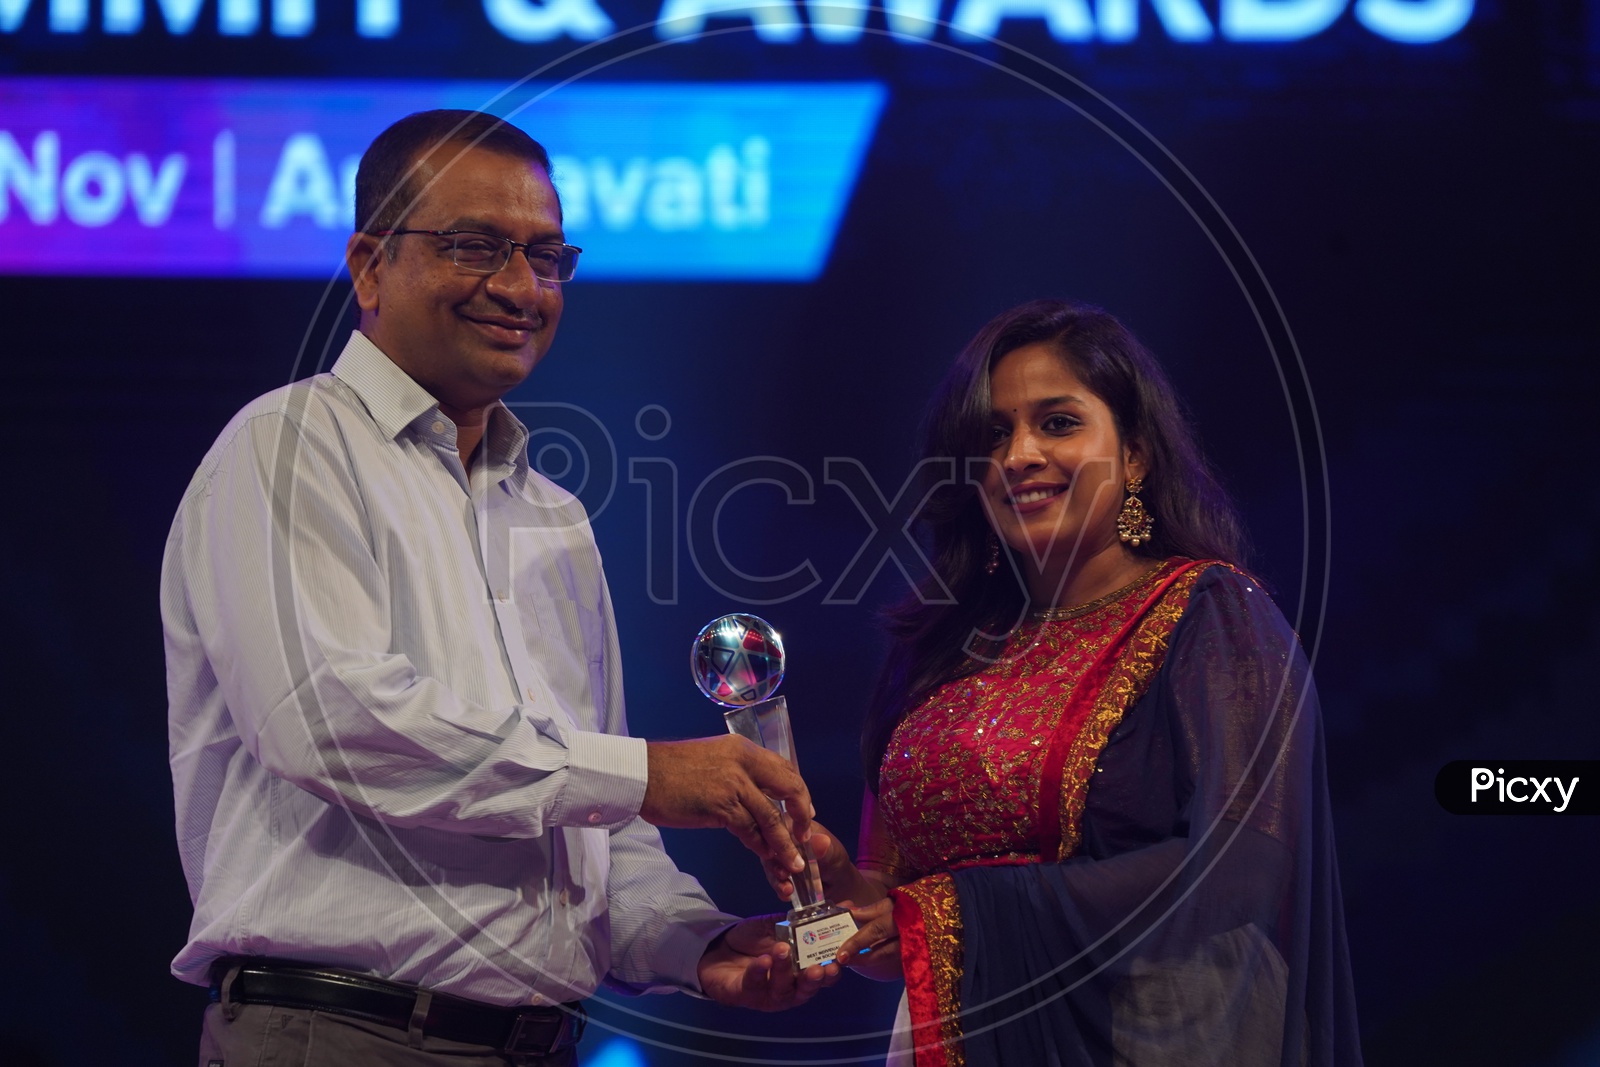 Social Media Summit & Awards Amaravati 2018